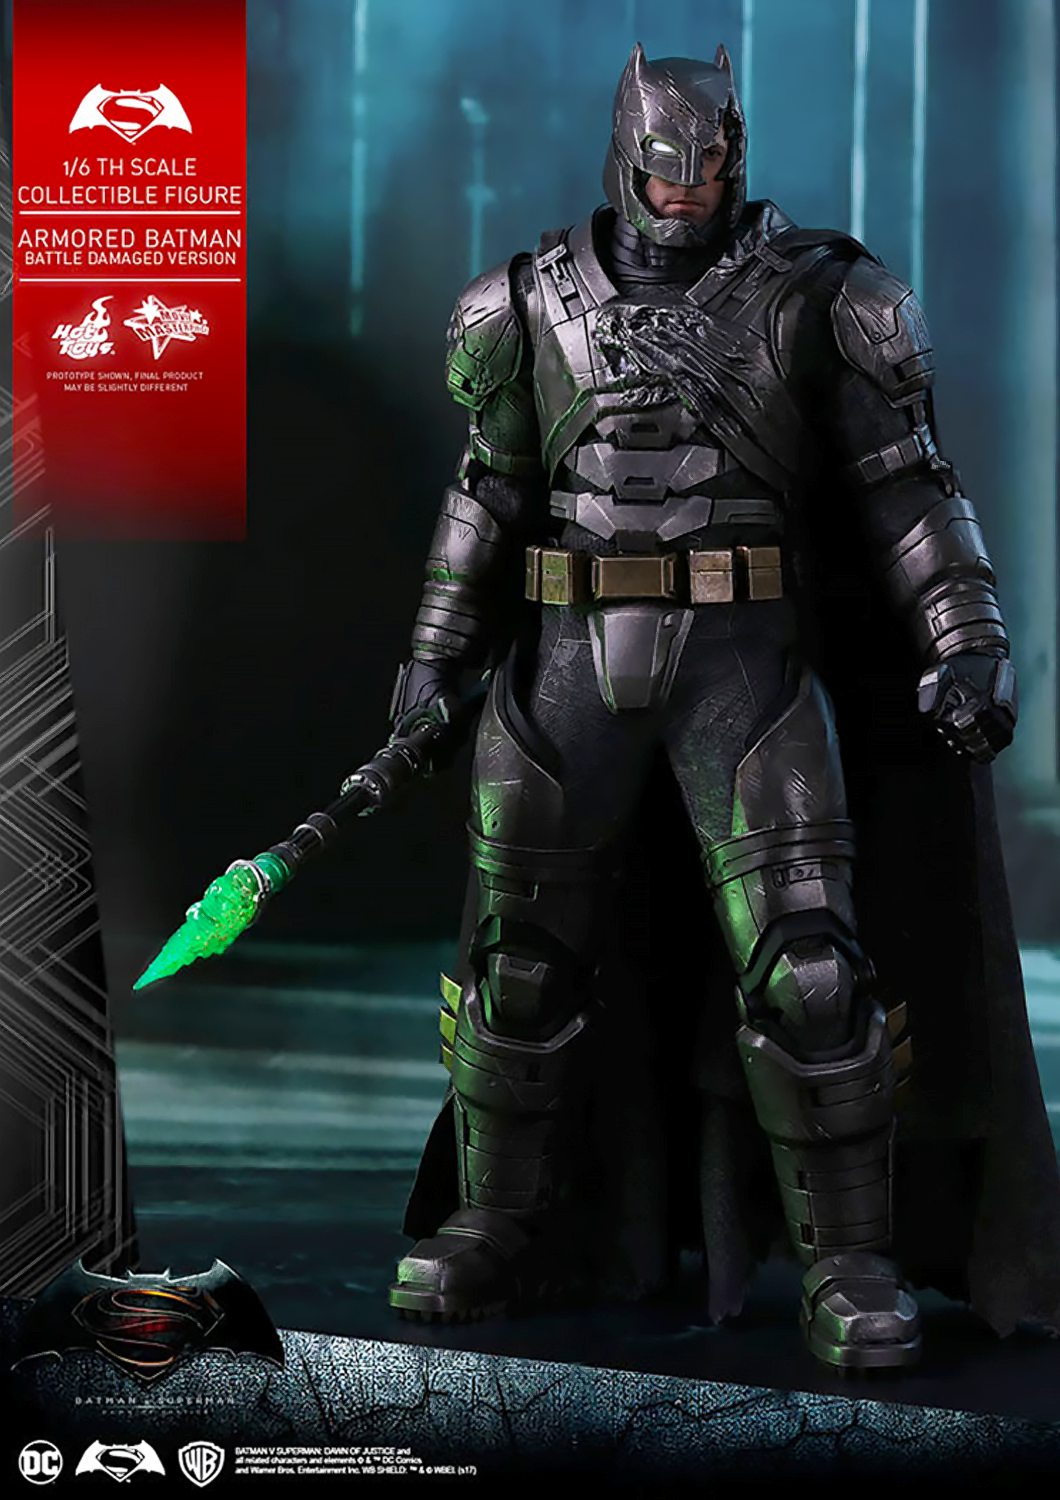 HOT TOYS DC  BATMAN VS SUPERMAN - ARMORED BATMAN BATTLE-DAMAGED EXCLUSIVE VERSION 1/6 MMS417 - Anotoys Collectibles